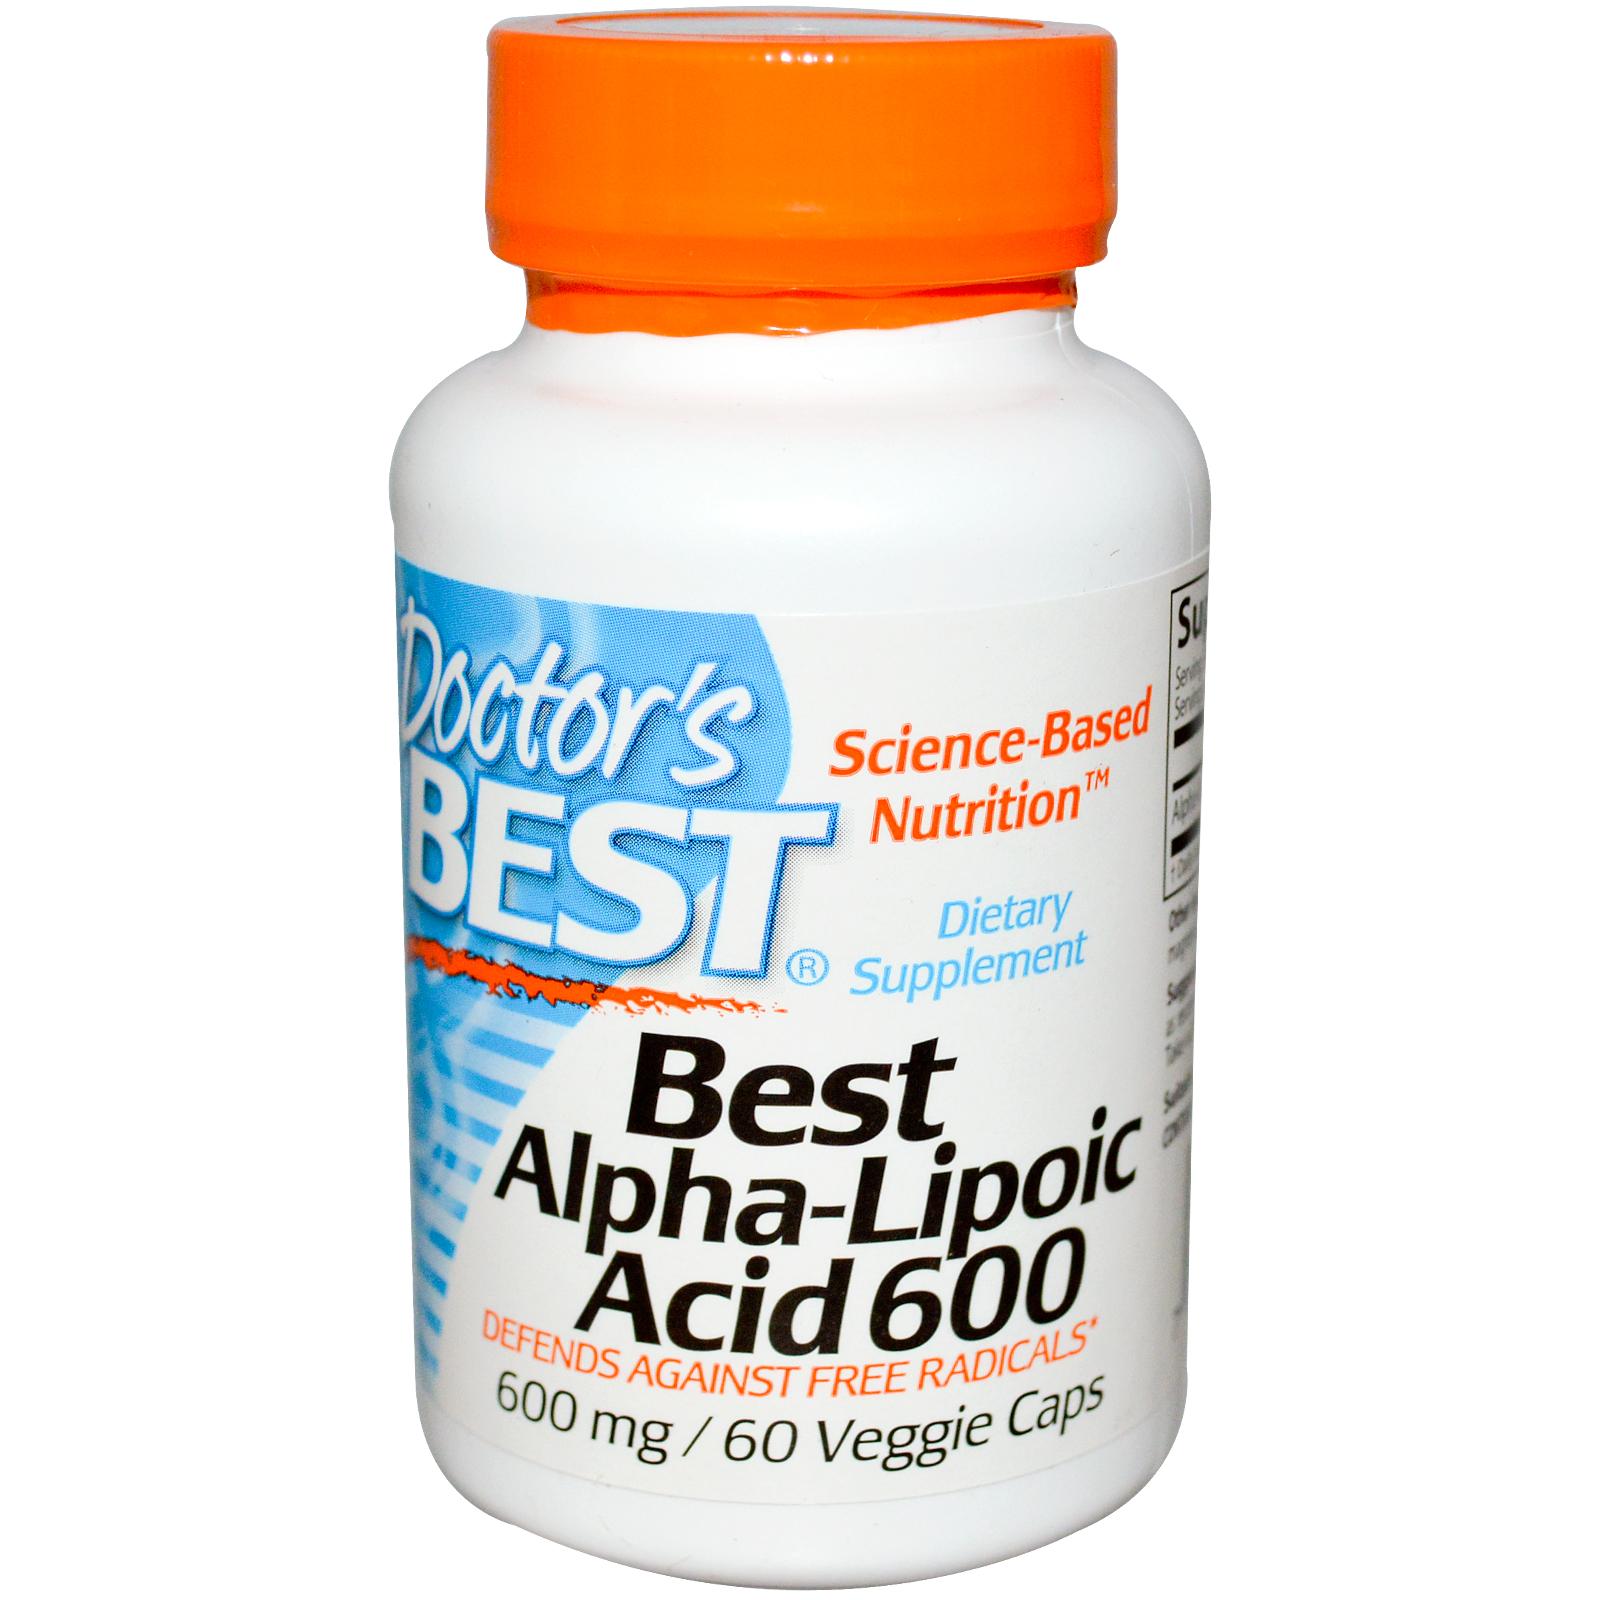 Doctors Best Best Alpha Lipoic Acid   $7.59(60%off)